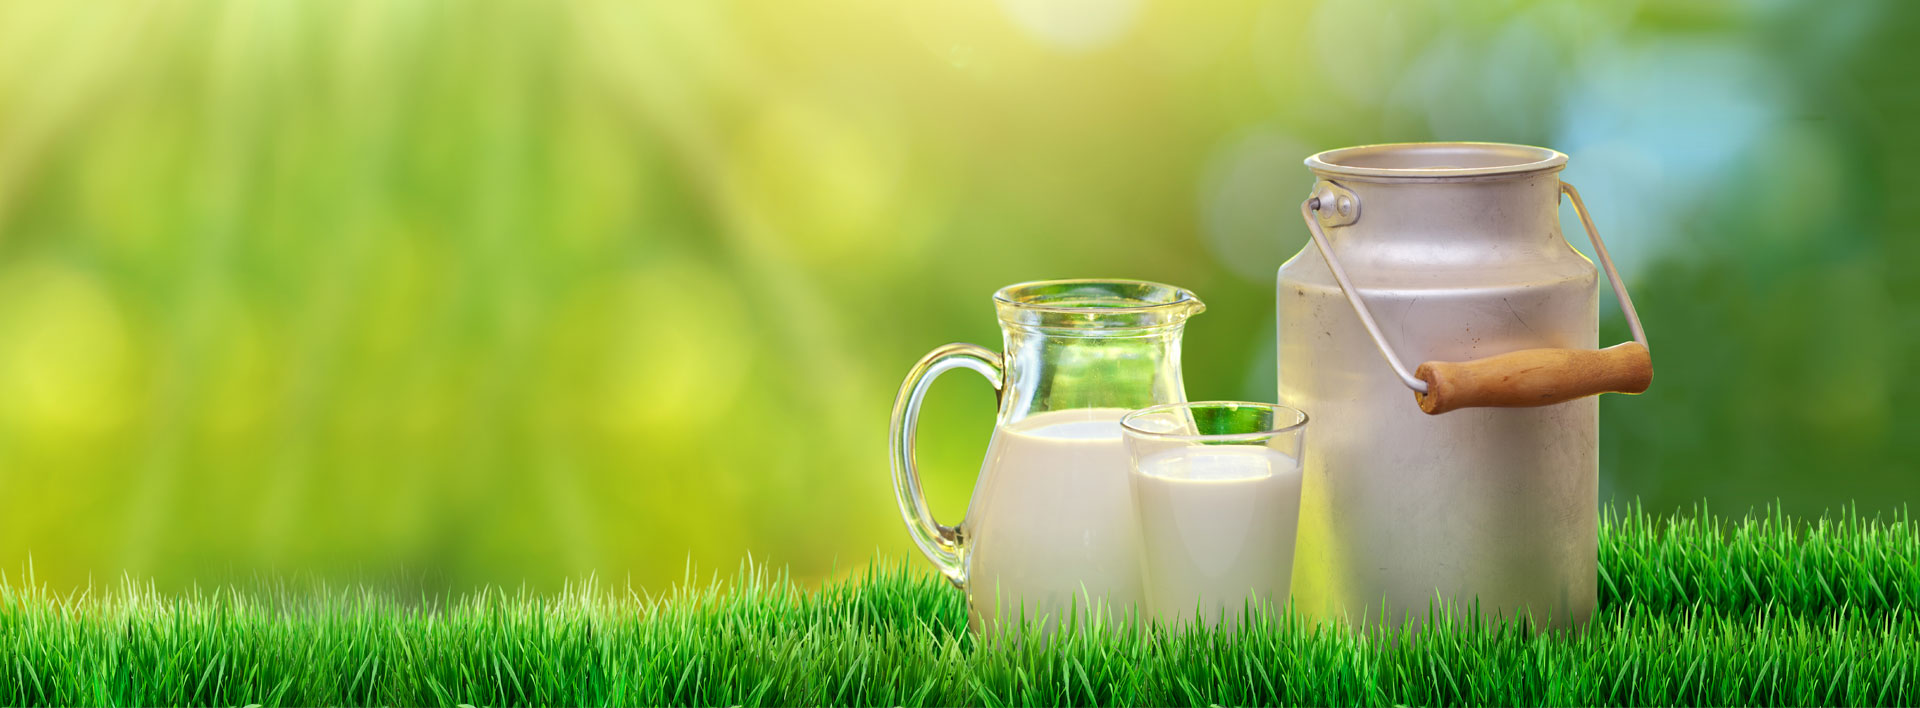 Молочная продукция на зеленом фоне